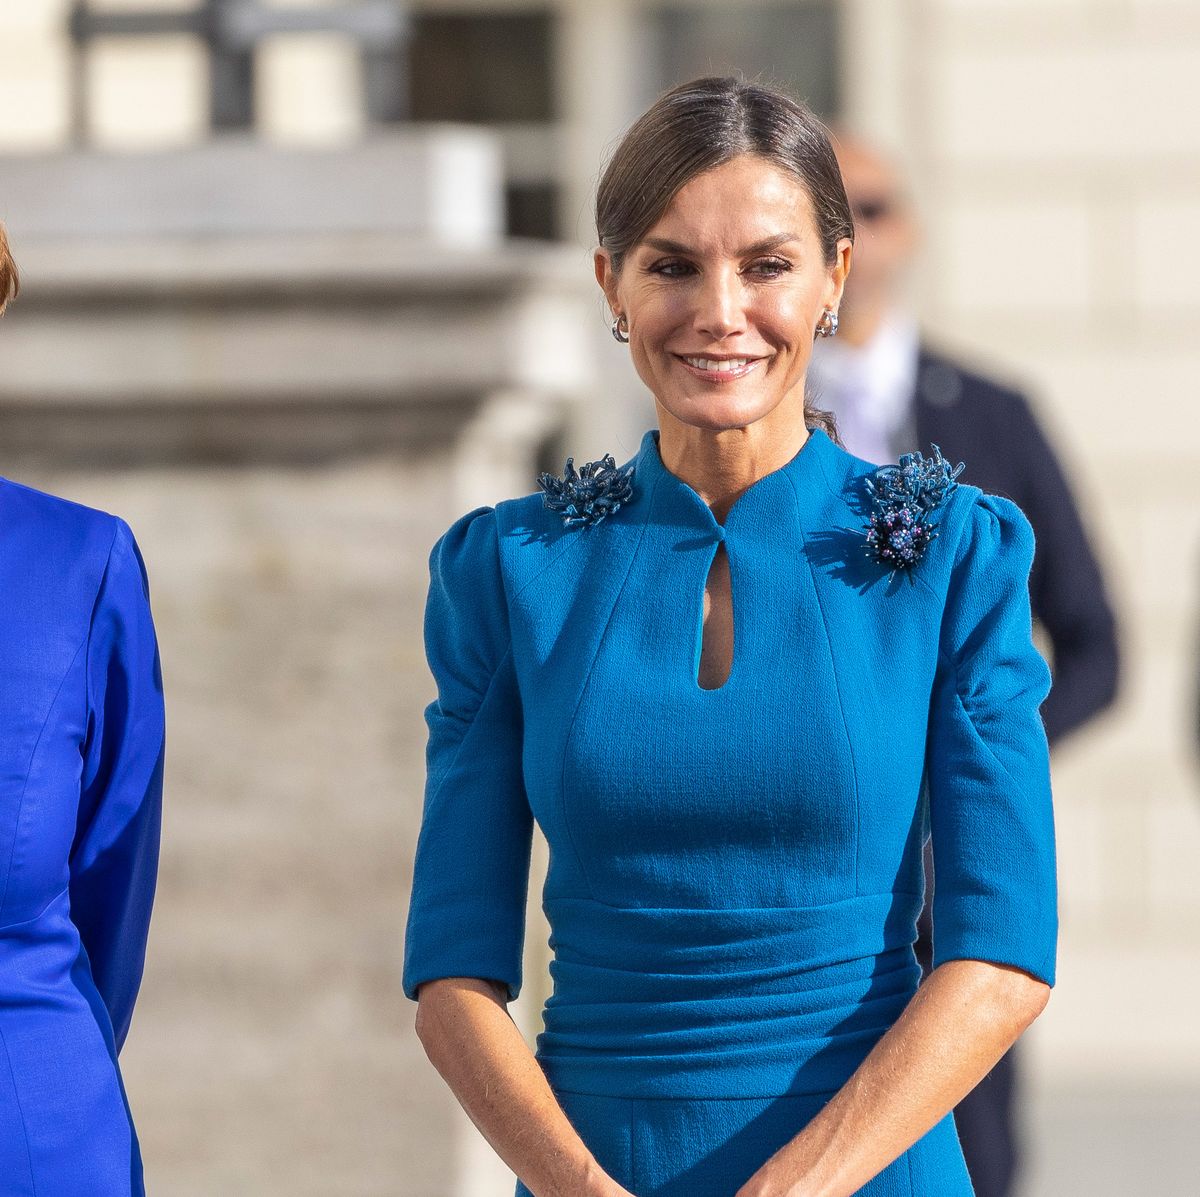 La reina se supera con vestido azul de Carolina Herrera